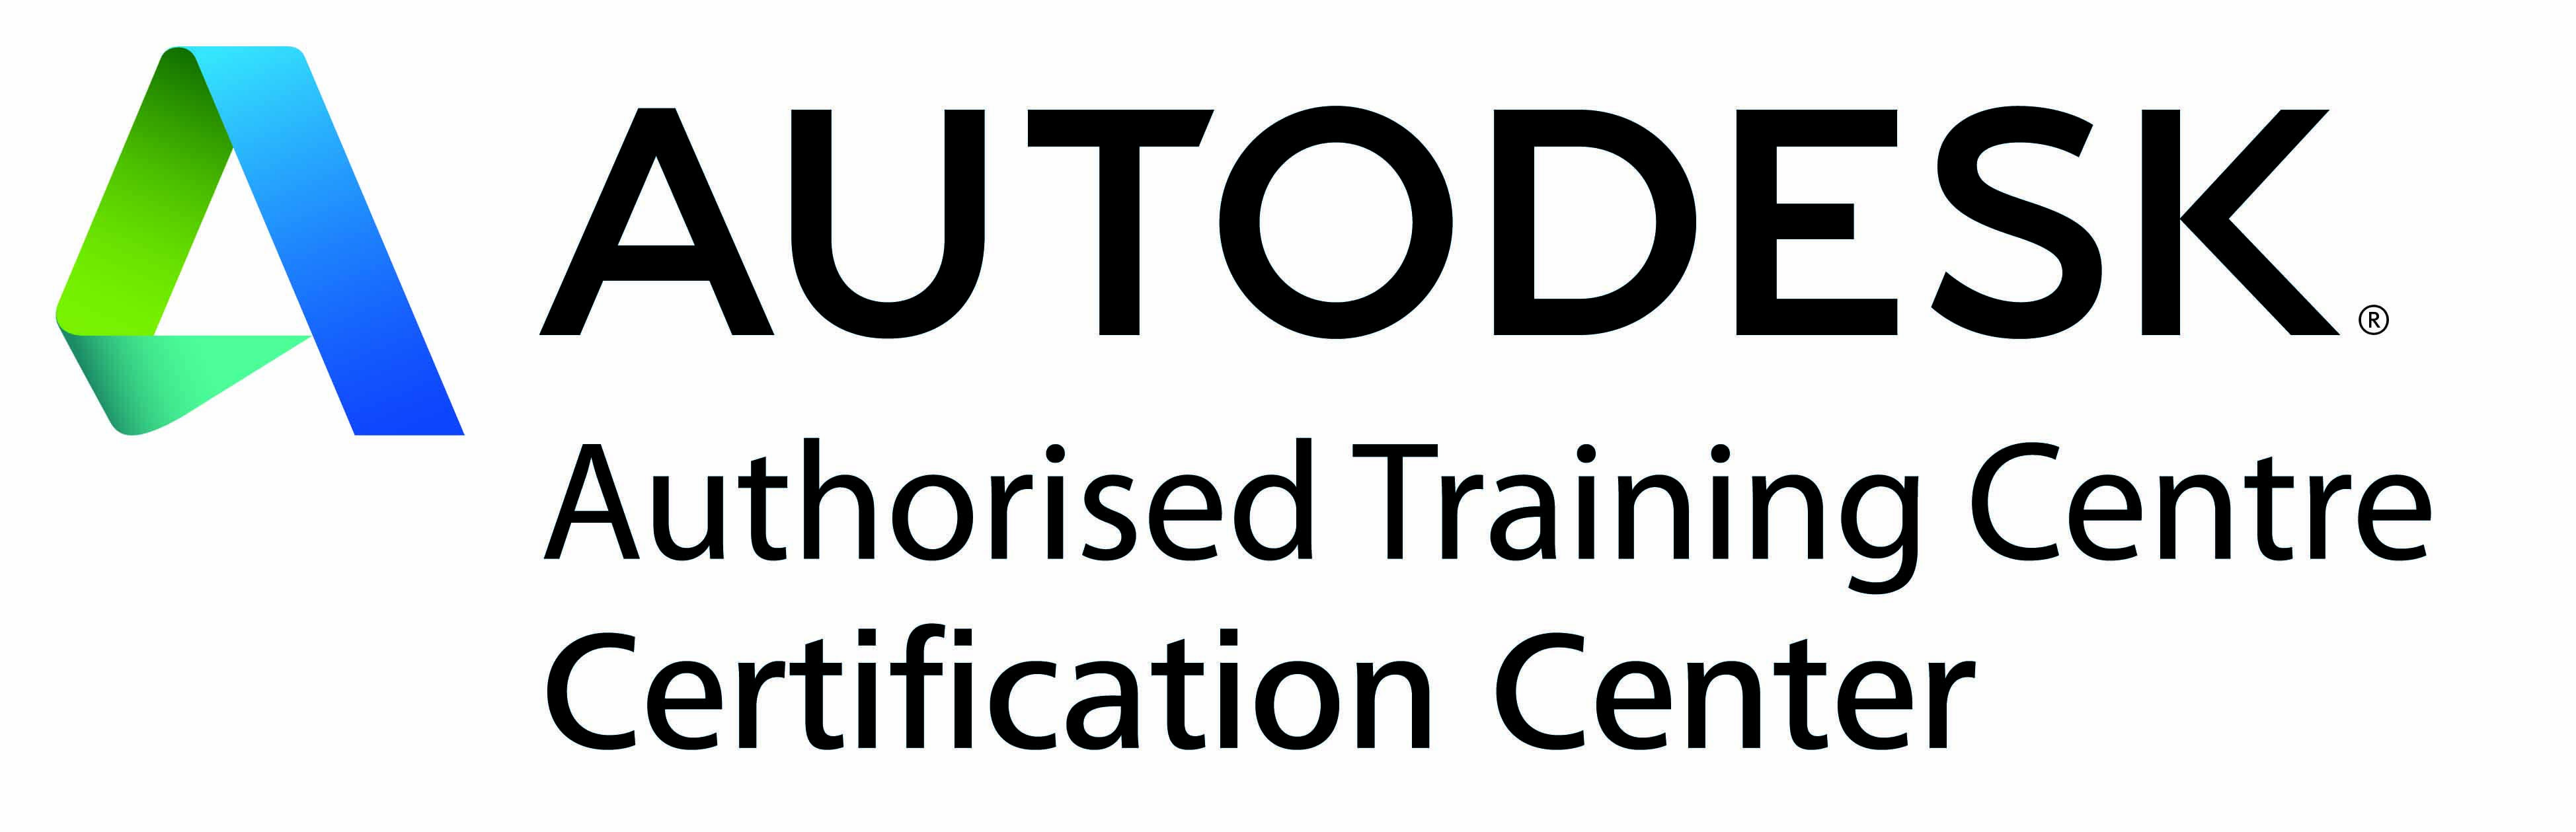 Autodesk Logo - CLS Training Center - Autodesk